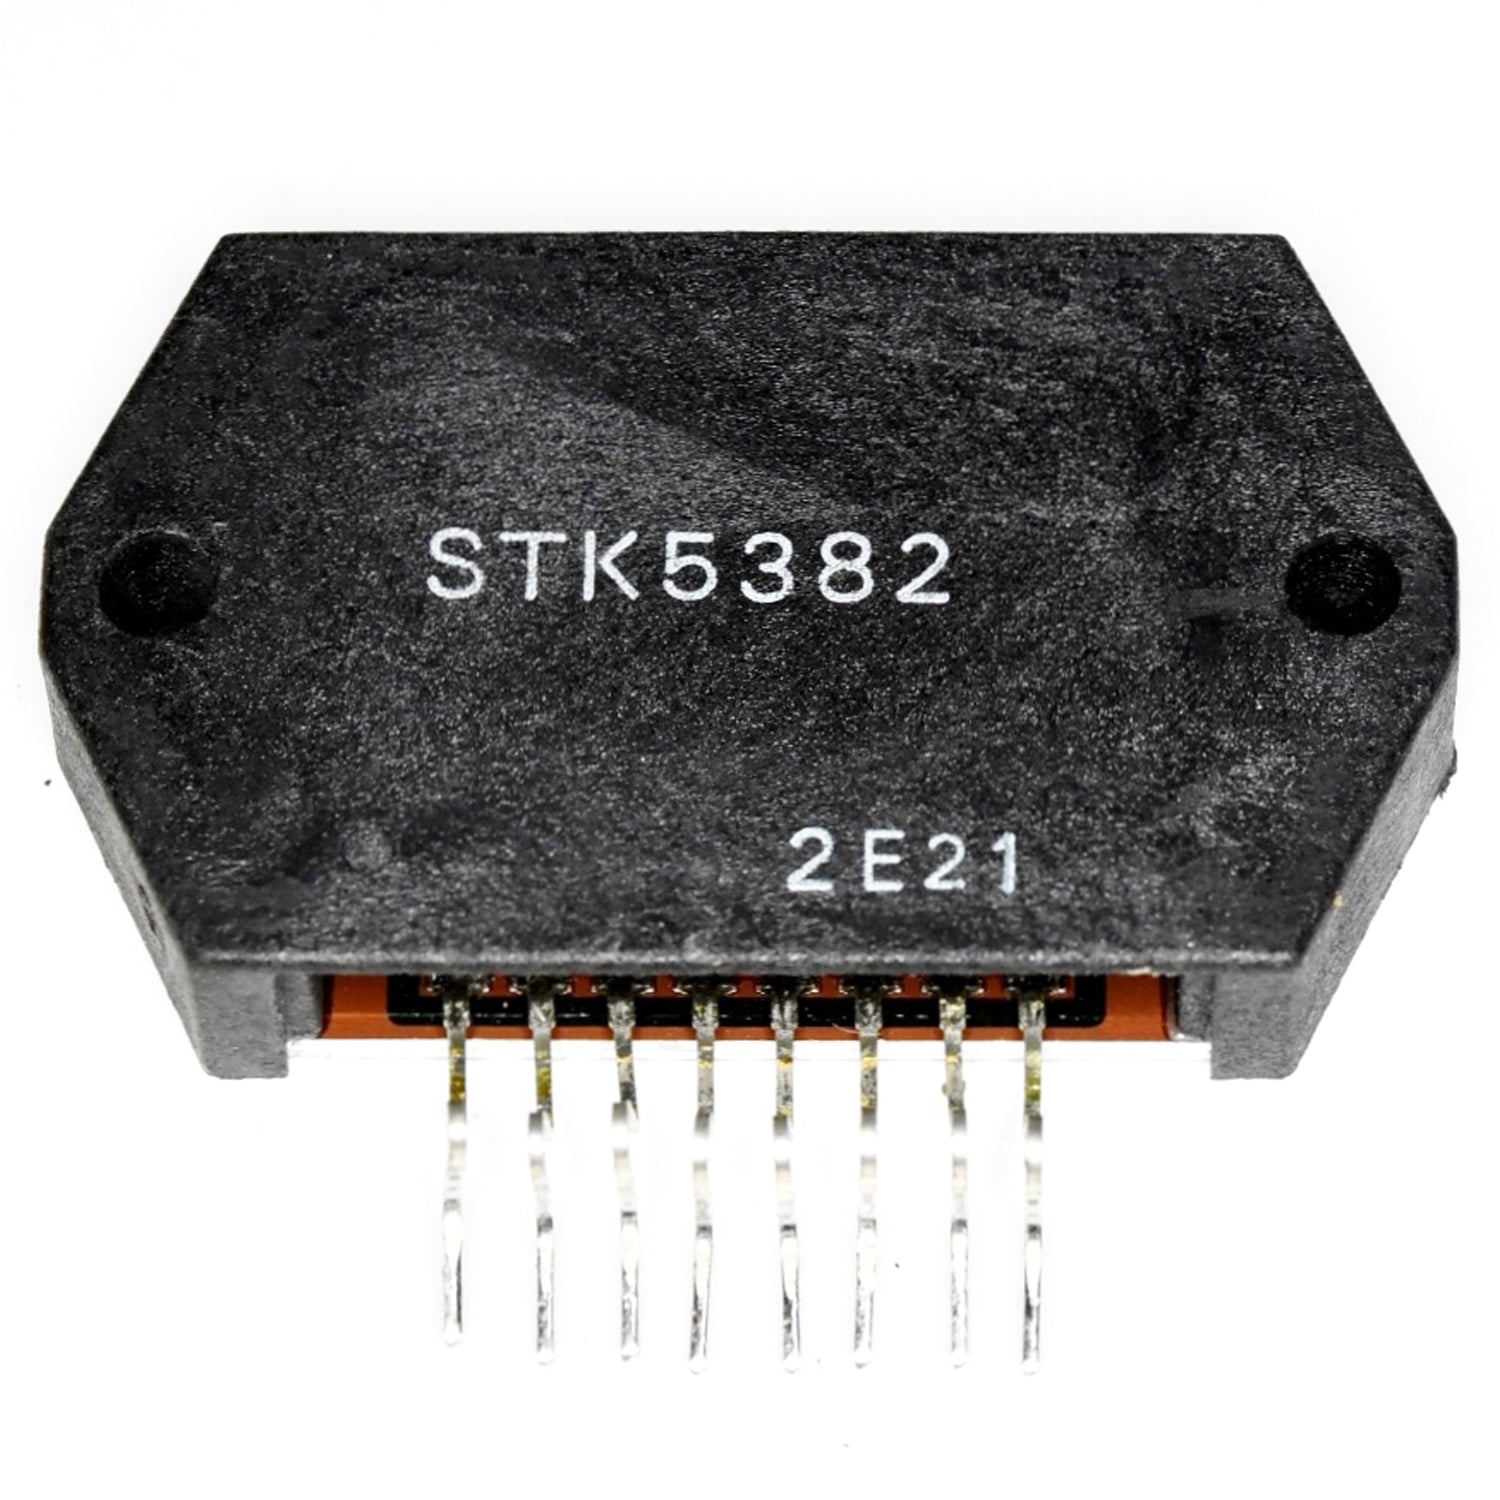 STK5382 IC SAN